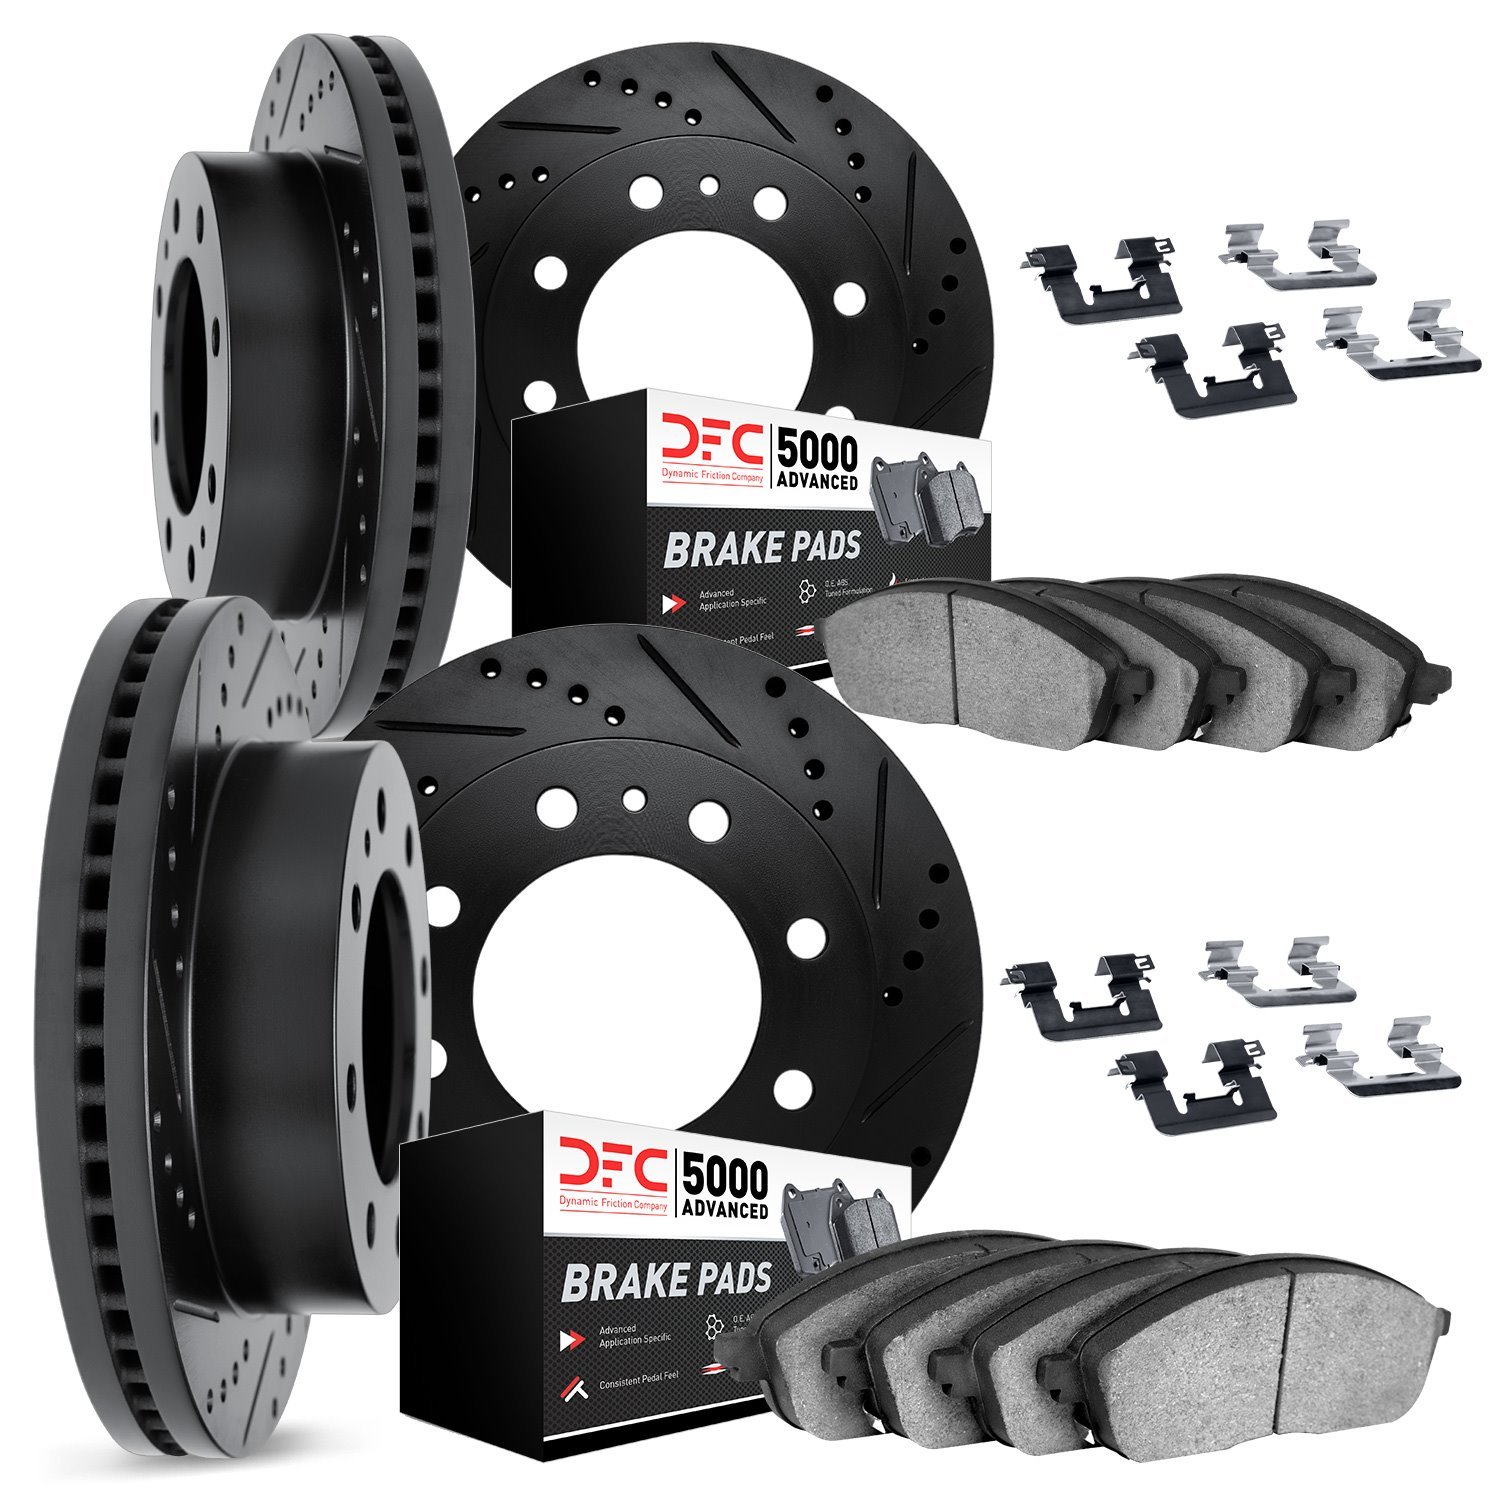 8514-40270 Drilled/Slotted Brake Rotors w/5000 Advanced Brake Pads Kit & Hardware [Black], Fits Select Mopar, Position: Front an